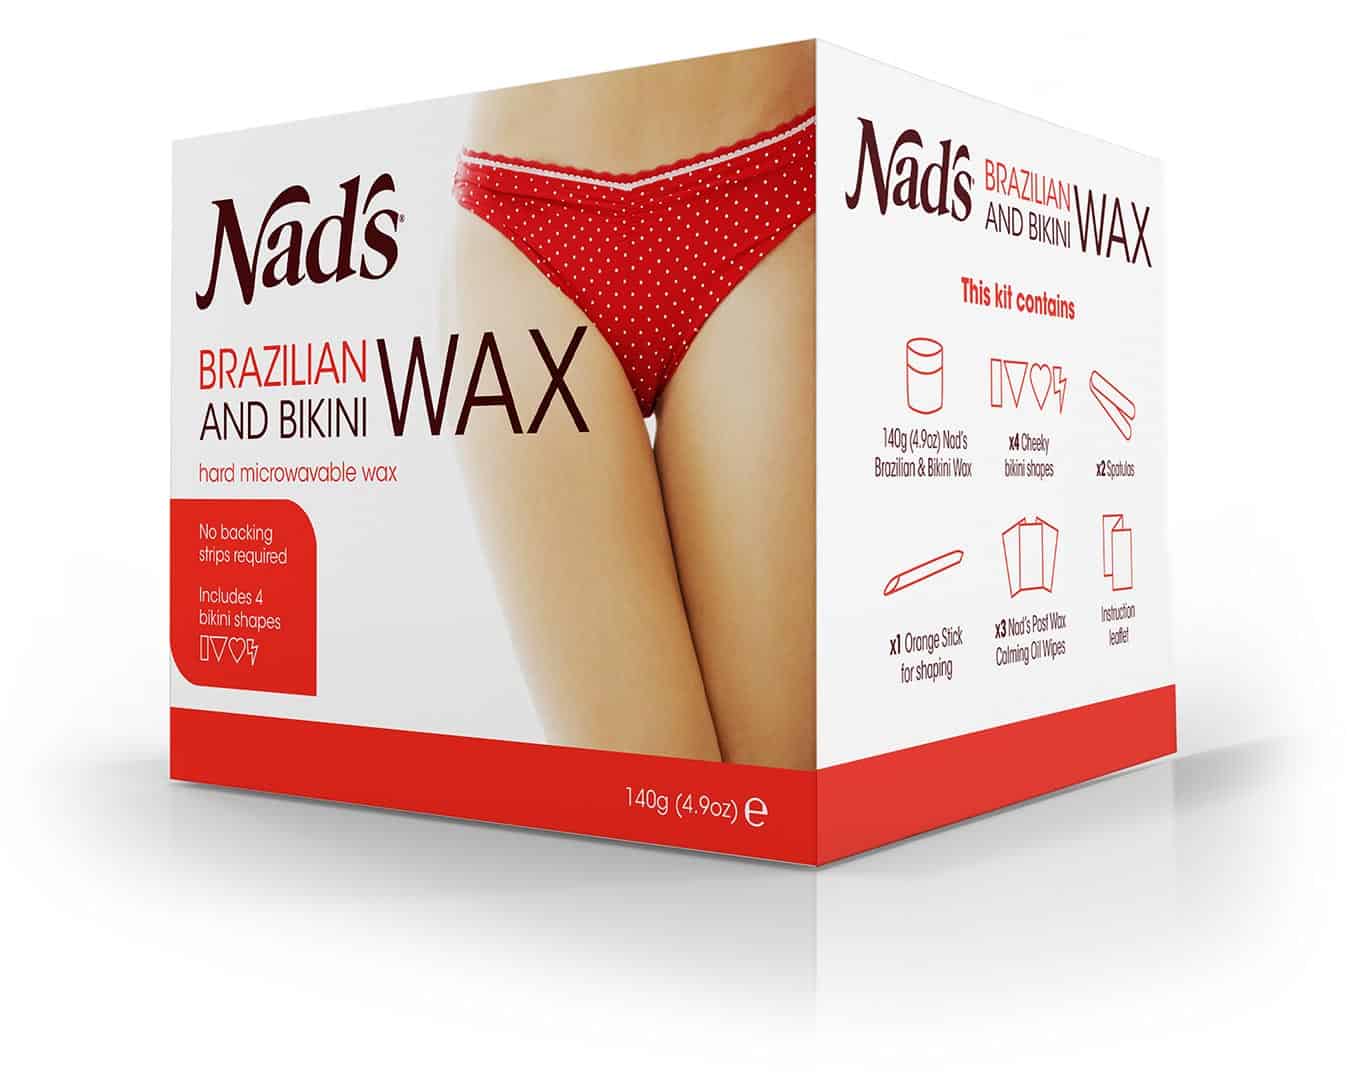 Nad's Hair Removal Brazilian & Bikini Wax product packaging